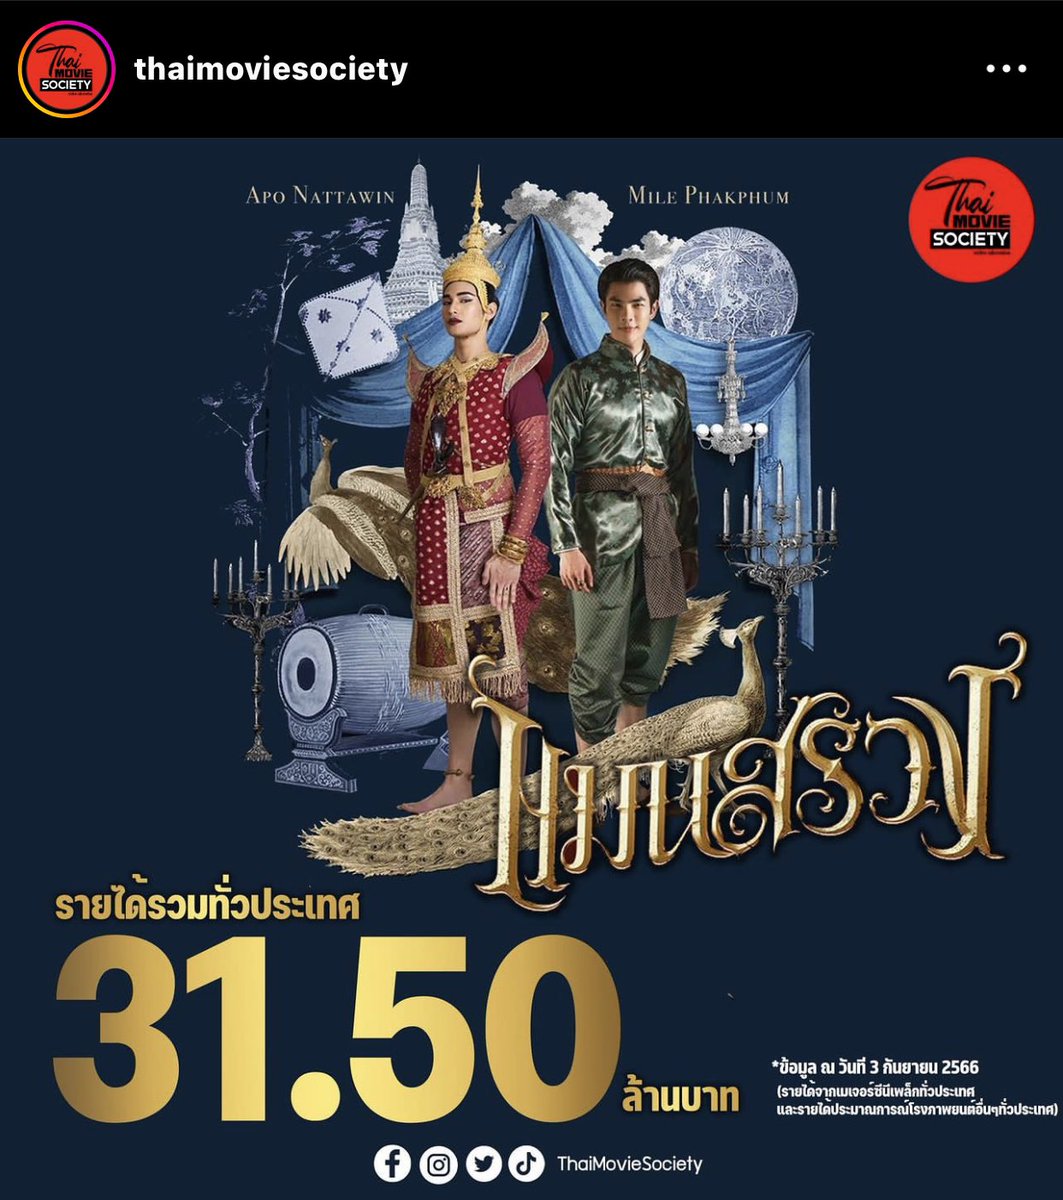 040923| Mile Phakphum & Apo Nattawin 

——wow amazing achievement more to come 🎉

#ManSuang x #แมนสรวง

📸|thaimoviesociety instagram post 

Caption: 

thaimoviesociety รายรวมทั่วประเทศ จากการเข้าฉาย 11วัน ภาพยนต์ #แมนสรวง #ManSuang ทำรายได้ 31.50 ล้านบาท

*รายได้ ณ วันที่ 3